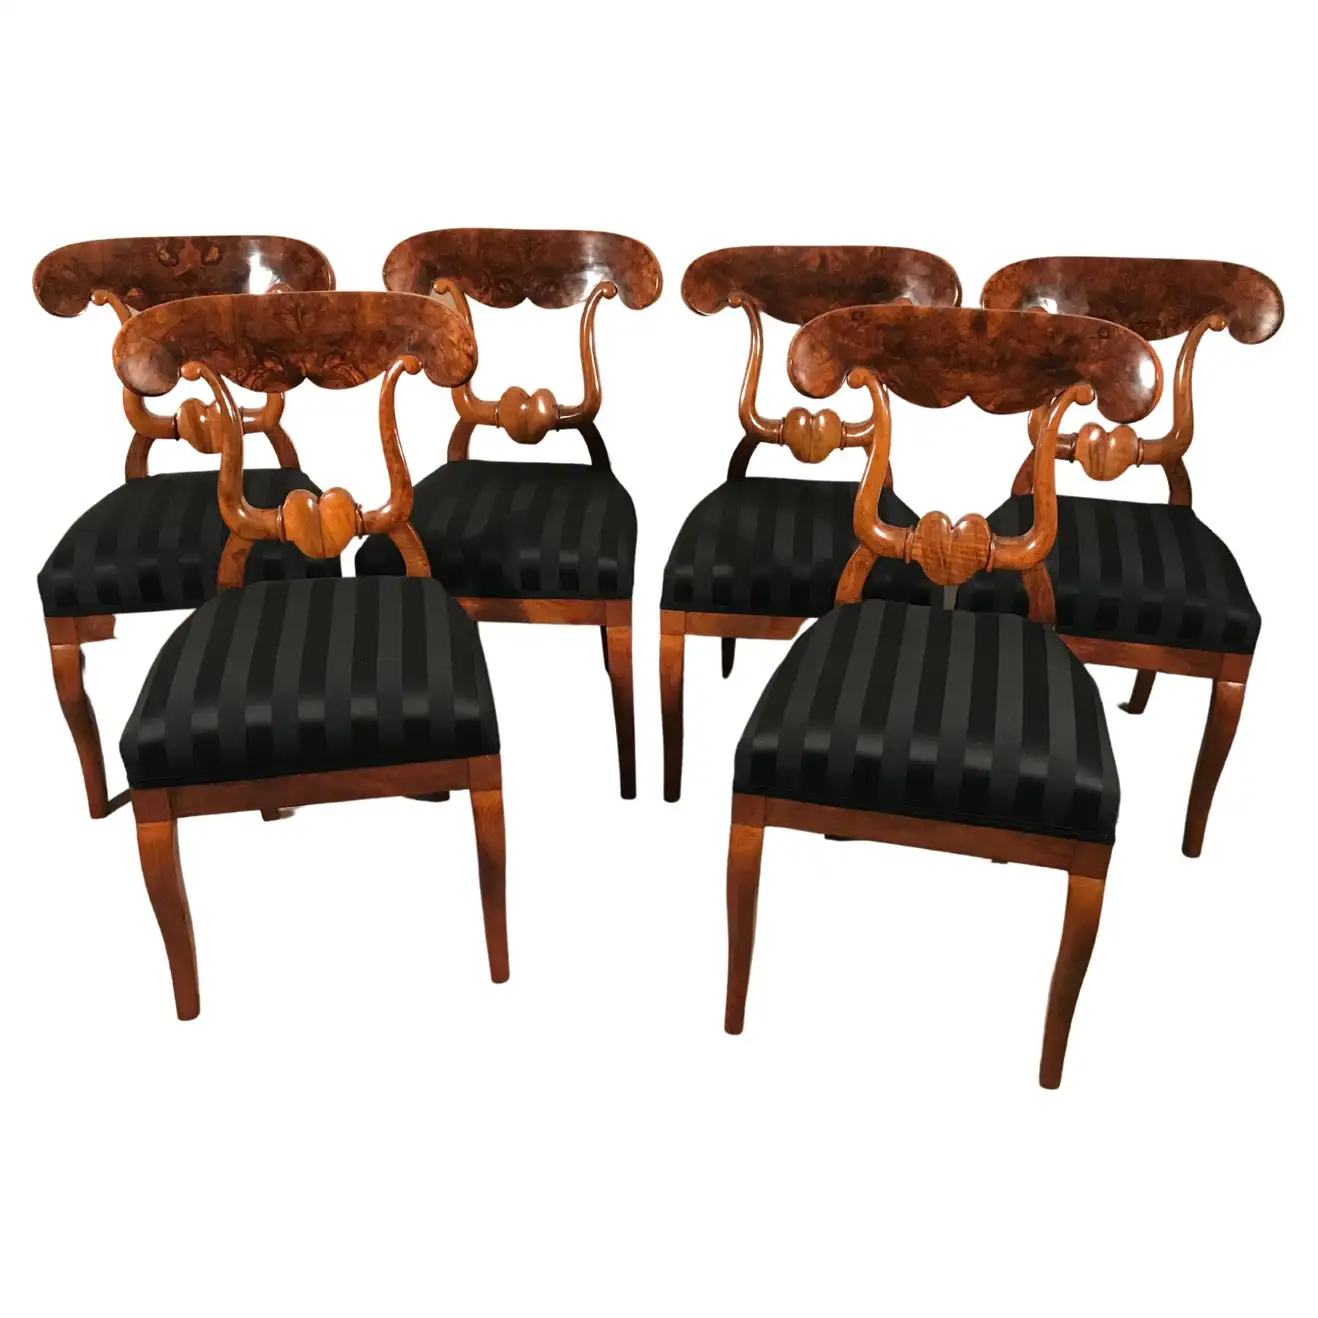 Set of six Biedermeier Chairs- walnut veneer- Styylish